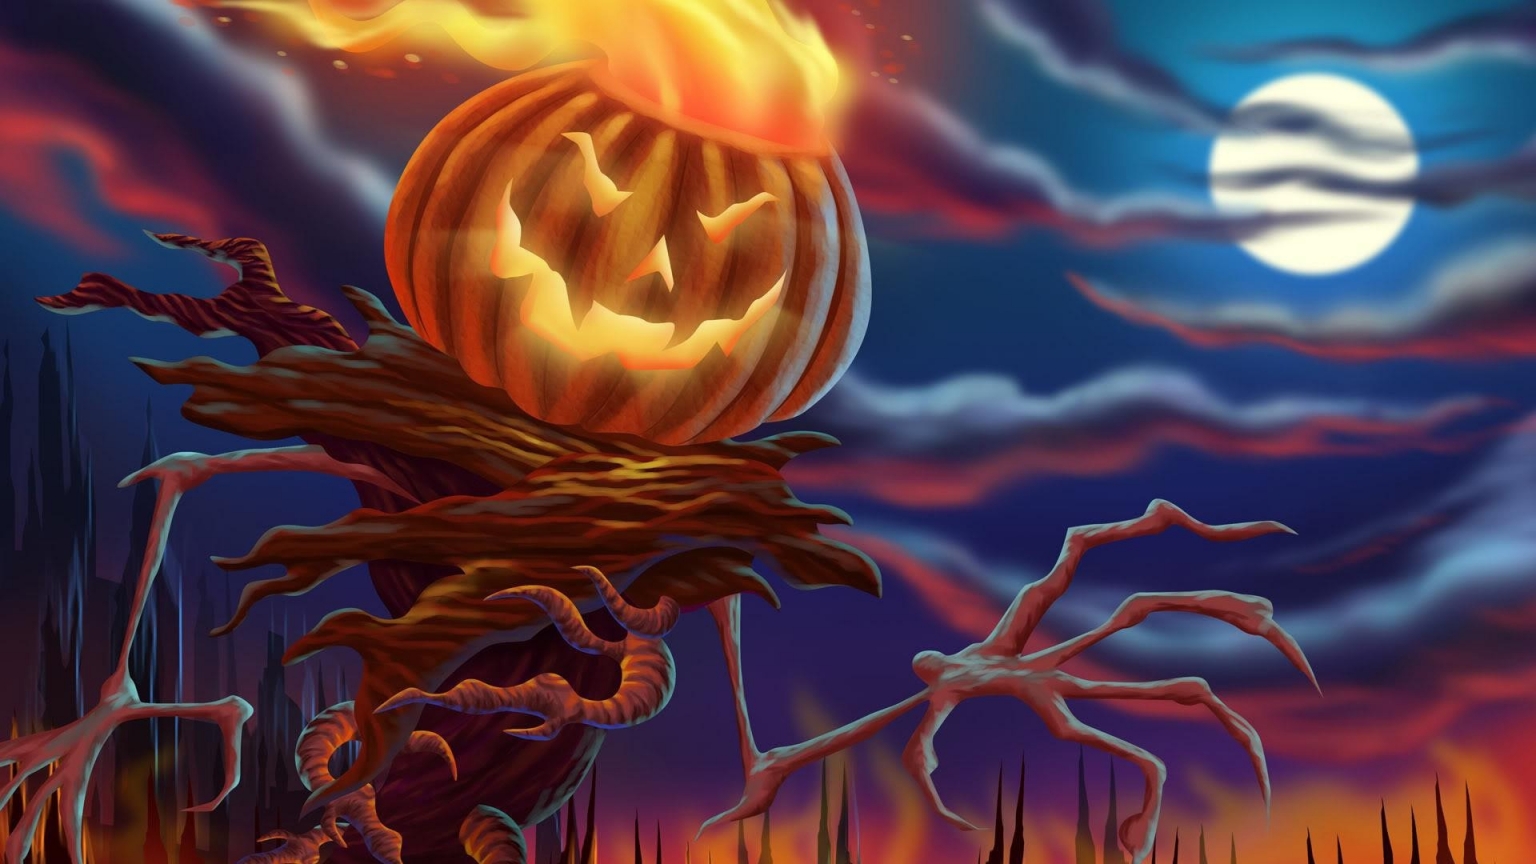 Halloween Digital Illustration for 1536 x 864 HDTV resolution